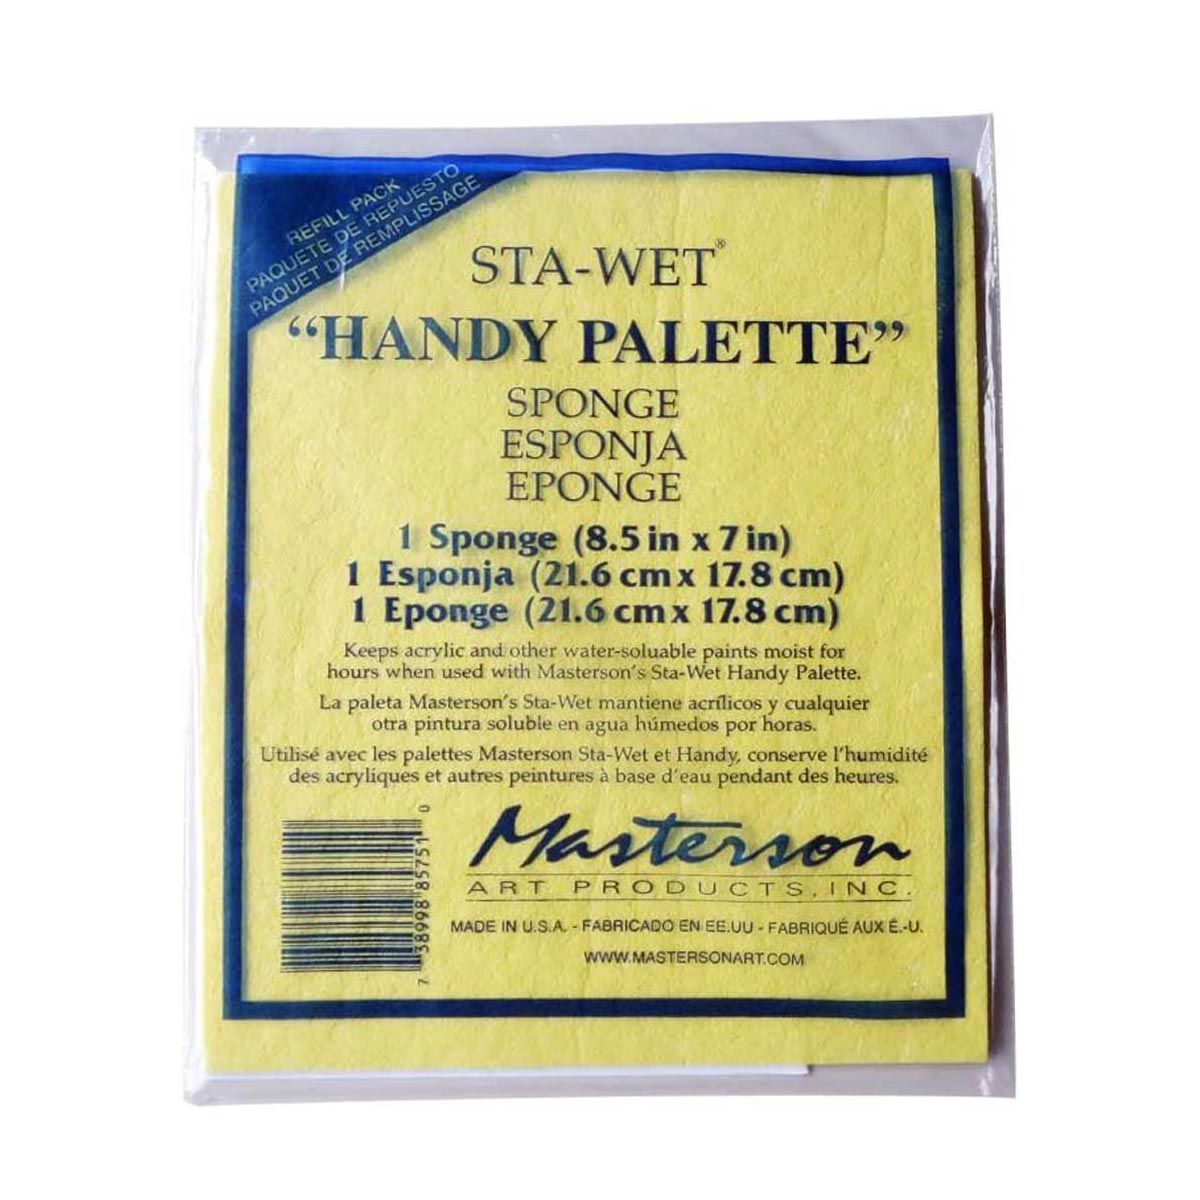 Masterson Sta-Wet Handy Palette Sponge Refill 8.5 x 7 inch